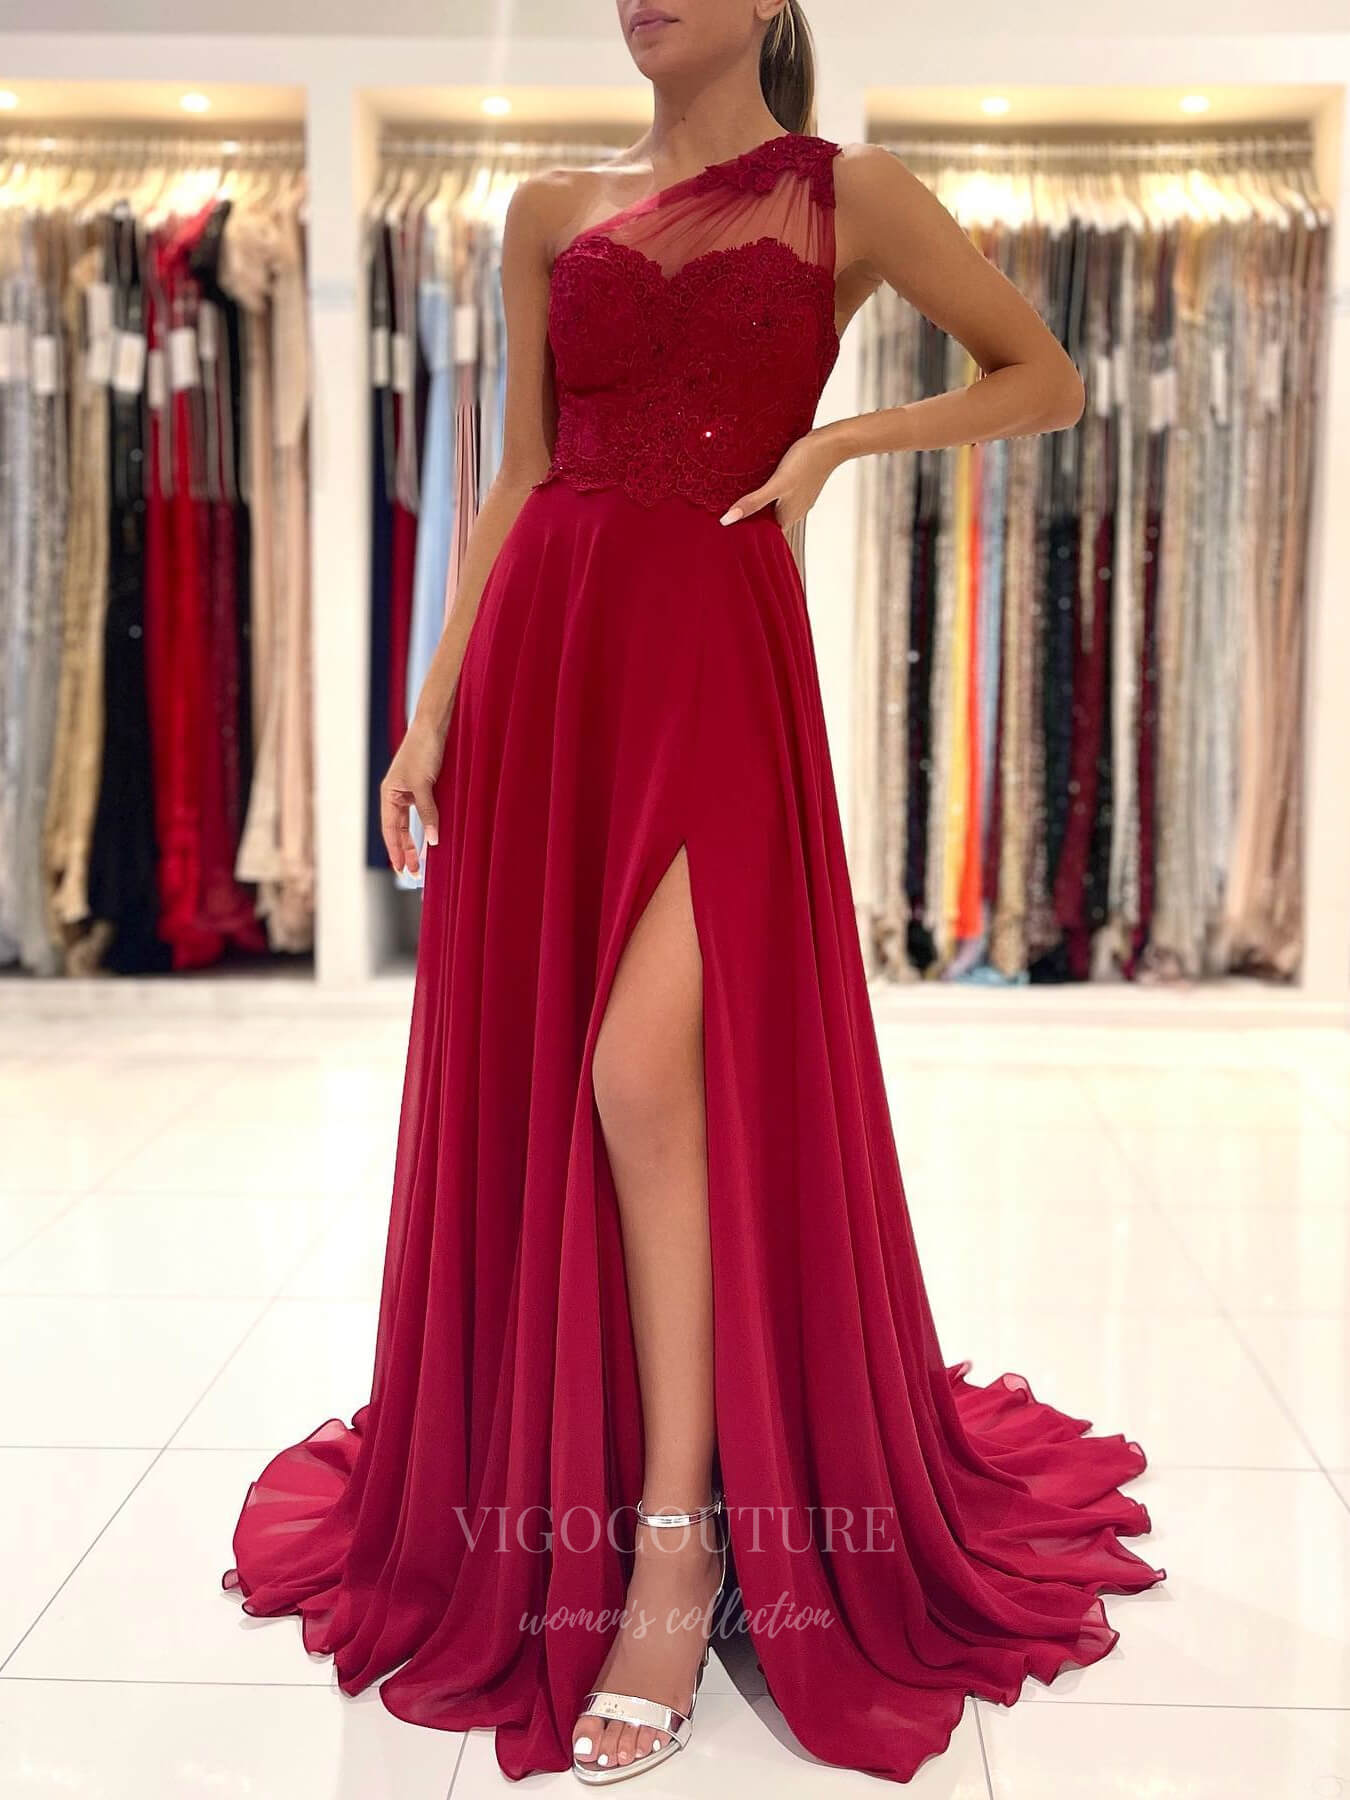 vigocouture-One Shoulder Chiffon Prom Dress 20831-Prom Dresses-vigocouture-